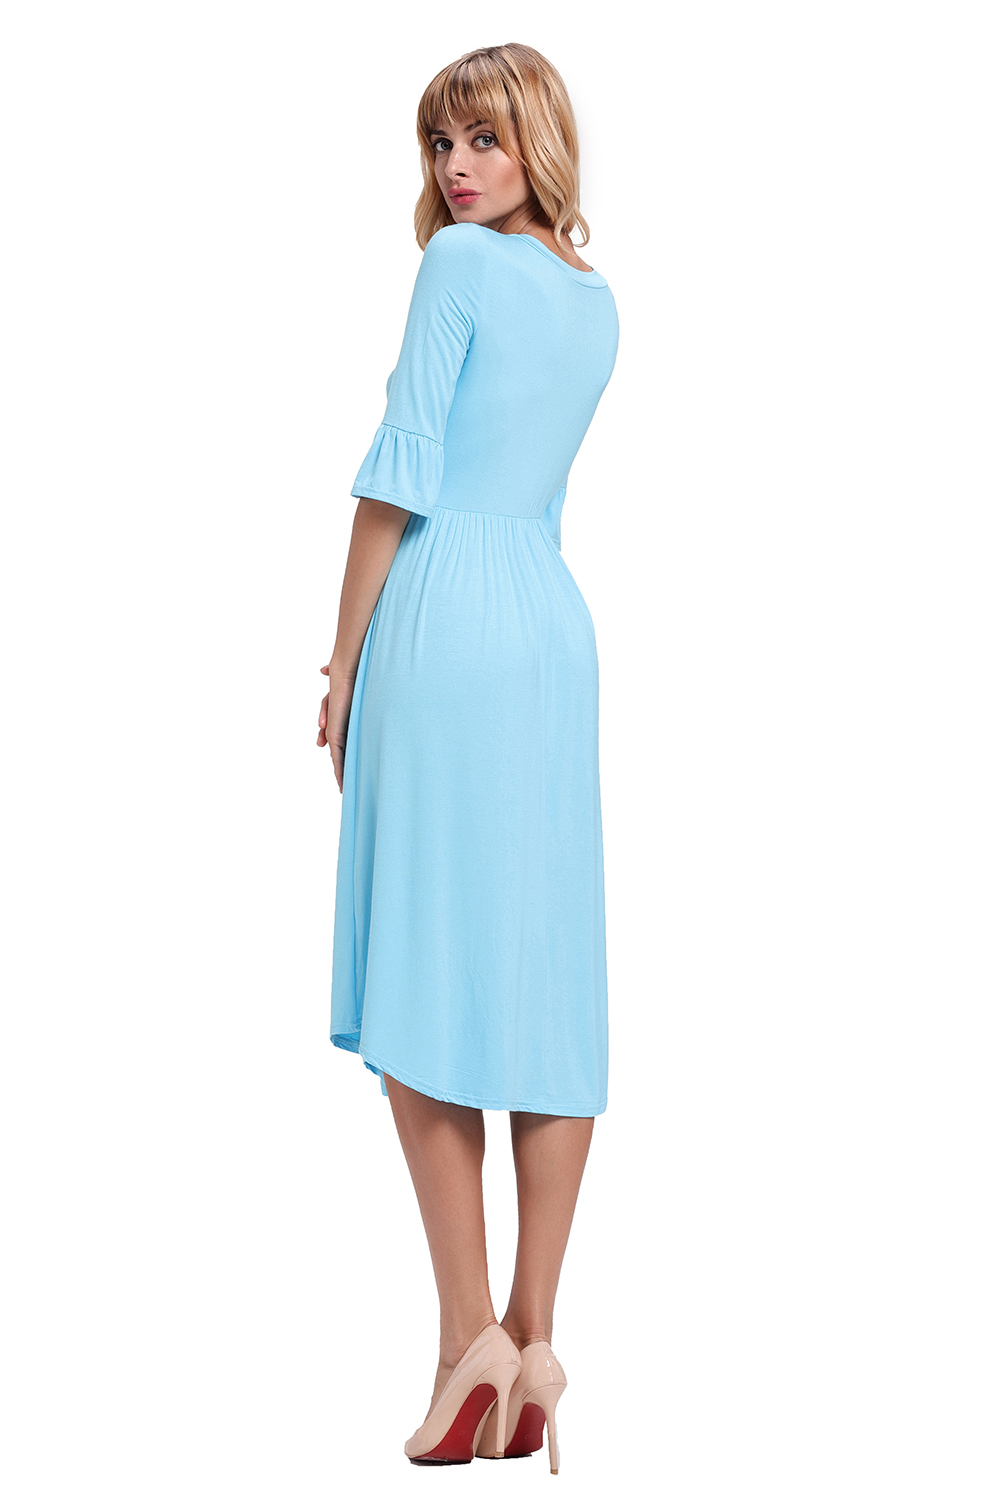 BY61652-5 Blue Ruffle Sleeve Midi Jersey Dress